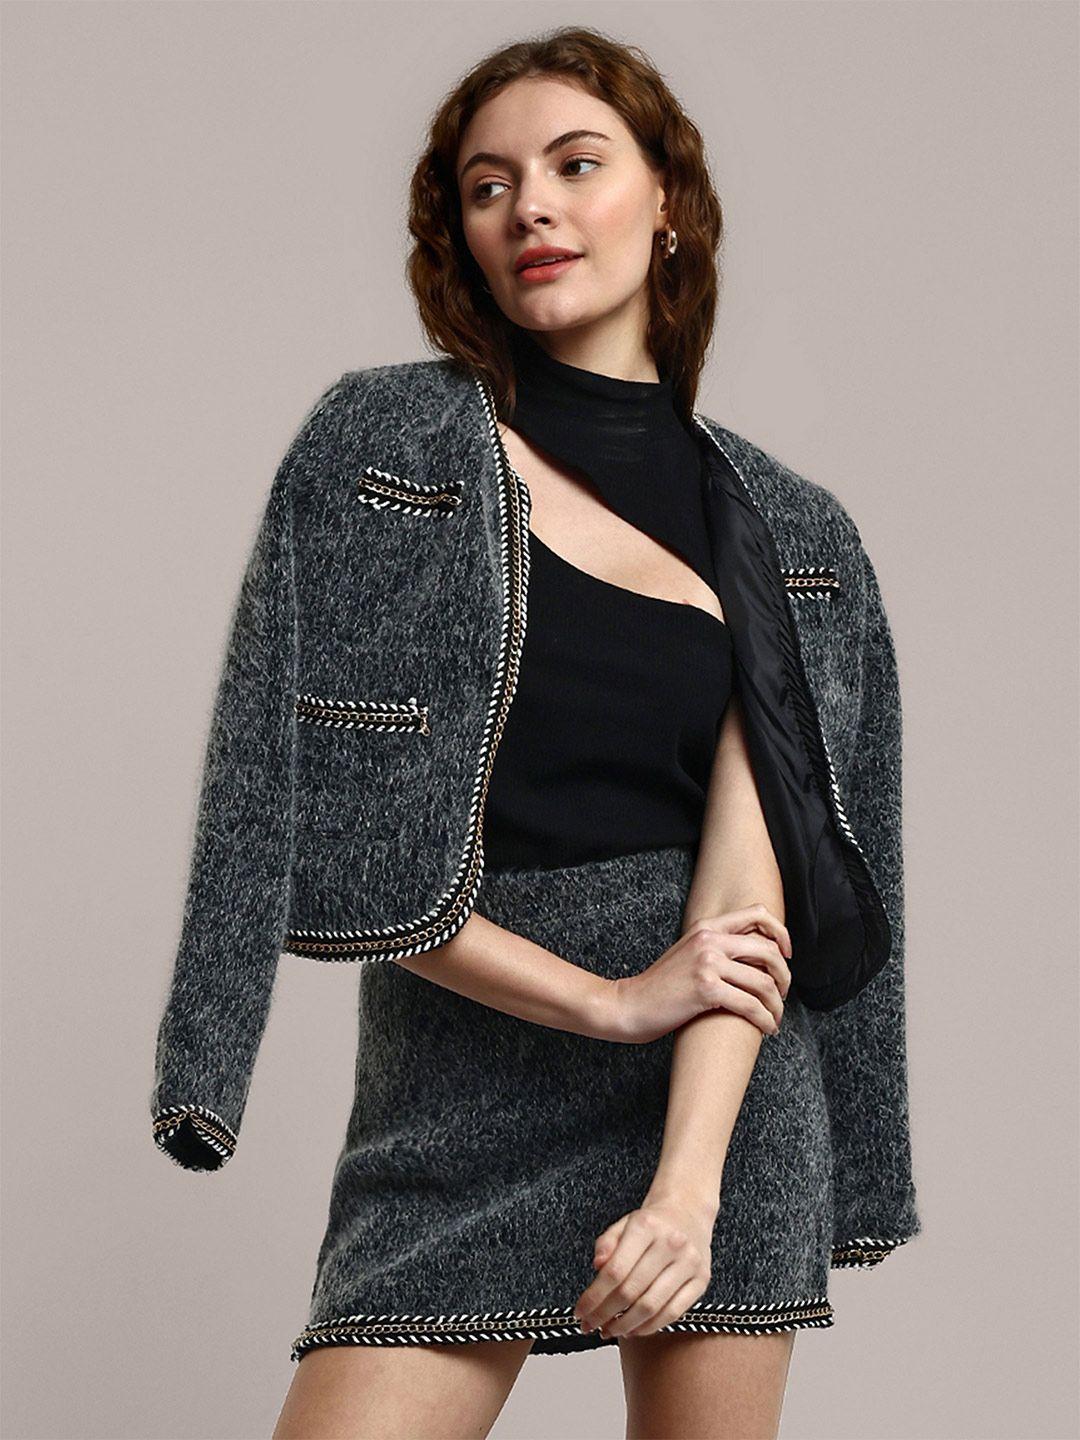 iki chic woolen tweed jacket & mini skirt co-ords